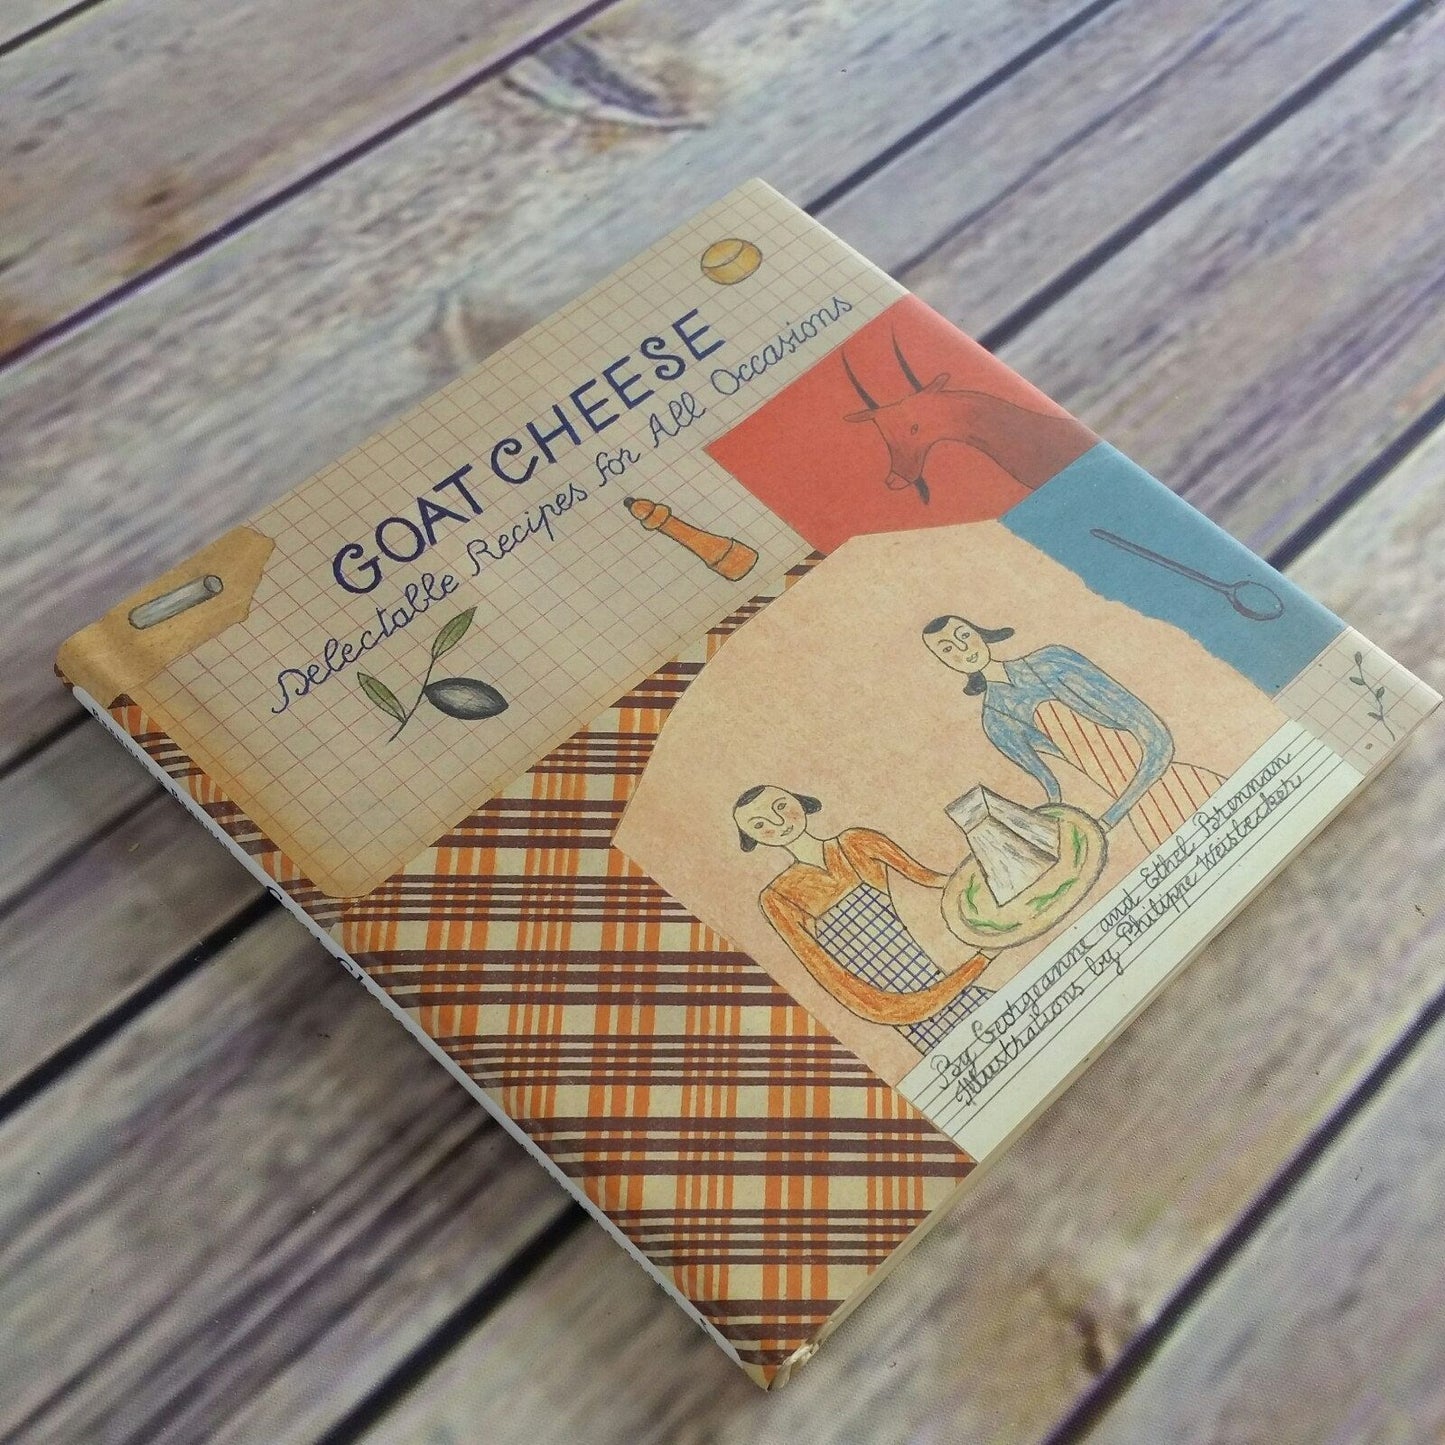 Vintage Cookbook Goat Cheese Recipes 1997 Hardcover with Dust Jacket Ethel Brennan Georgeanne Brennan